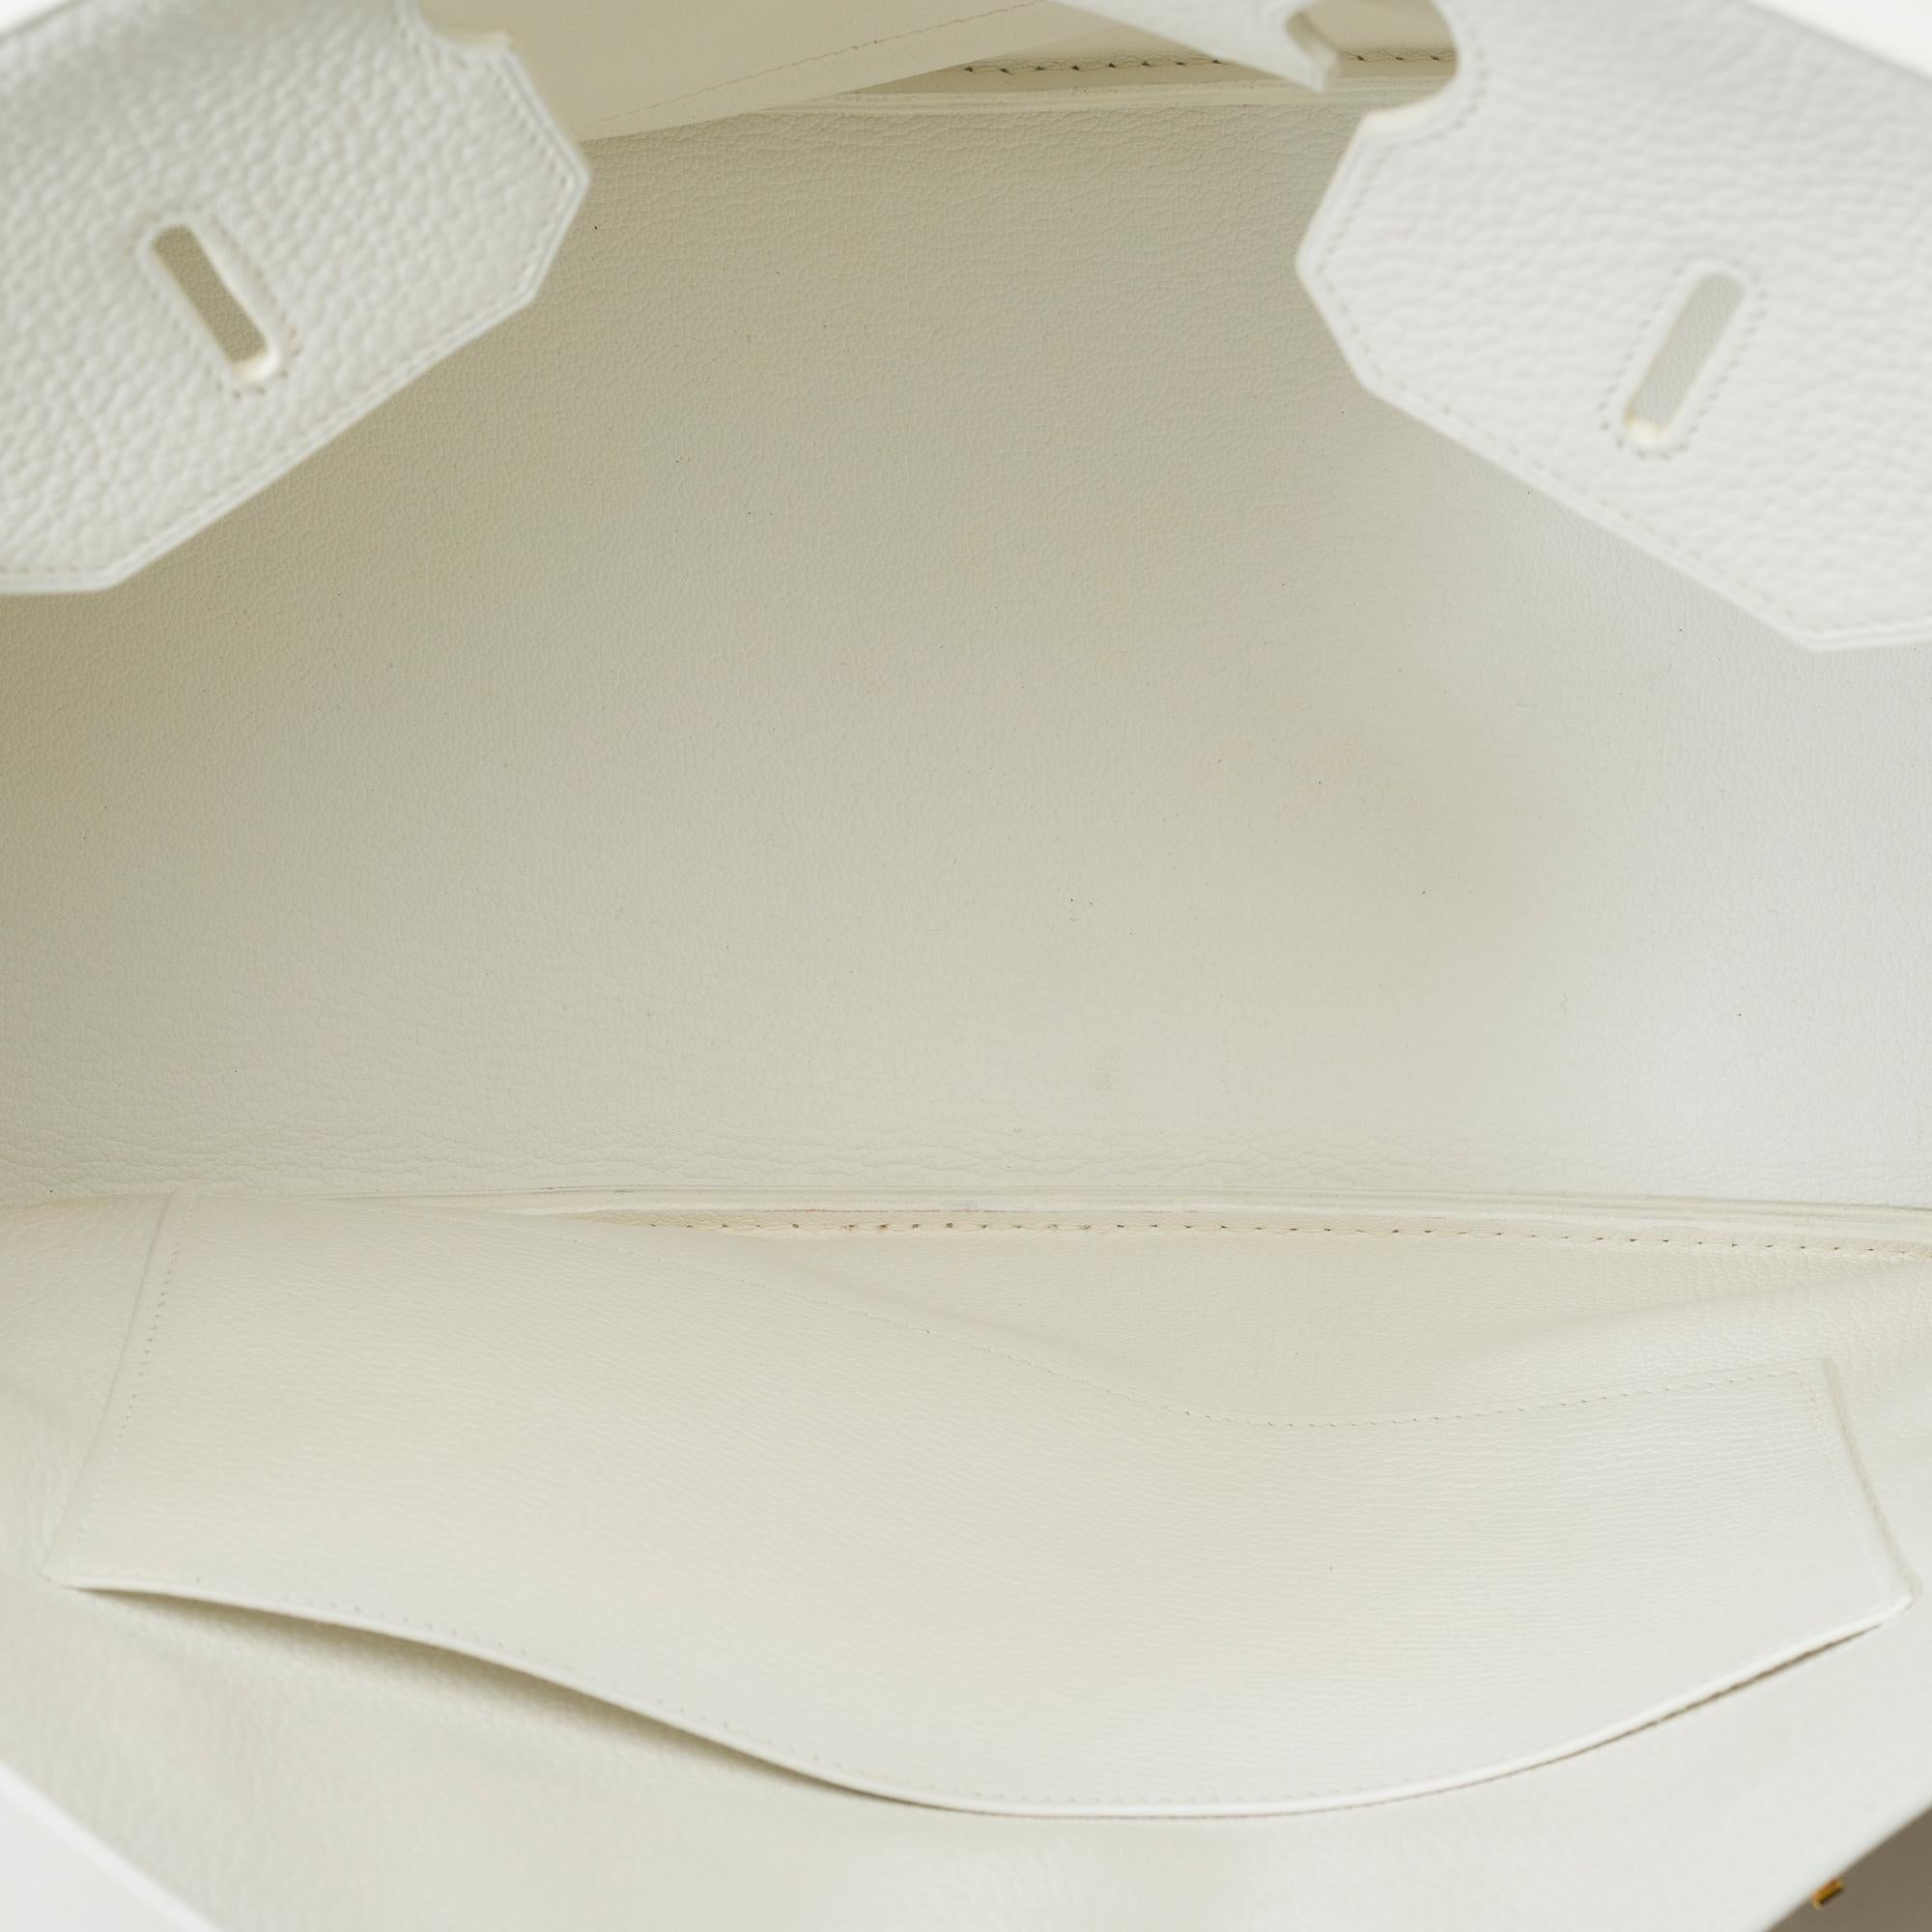 Stunning Hermès Birkin 35 handbag in White Taurillon Clemence leather, GHW 4